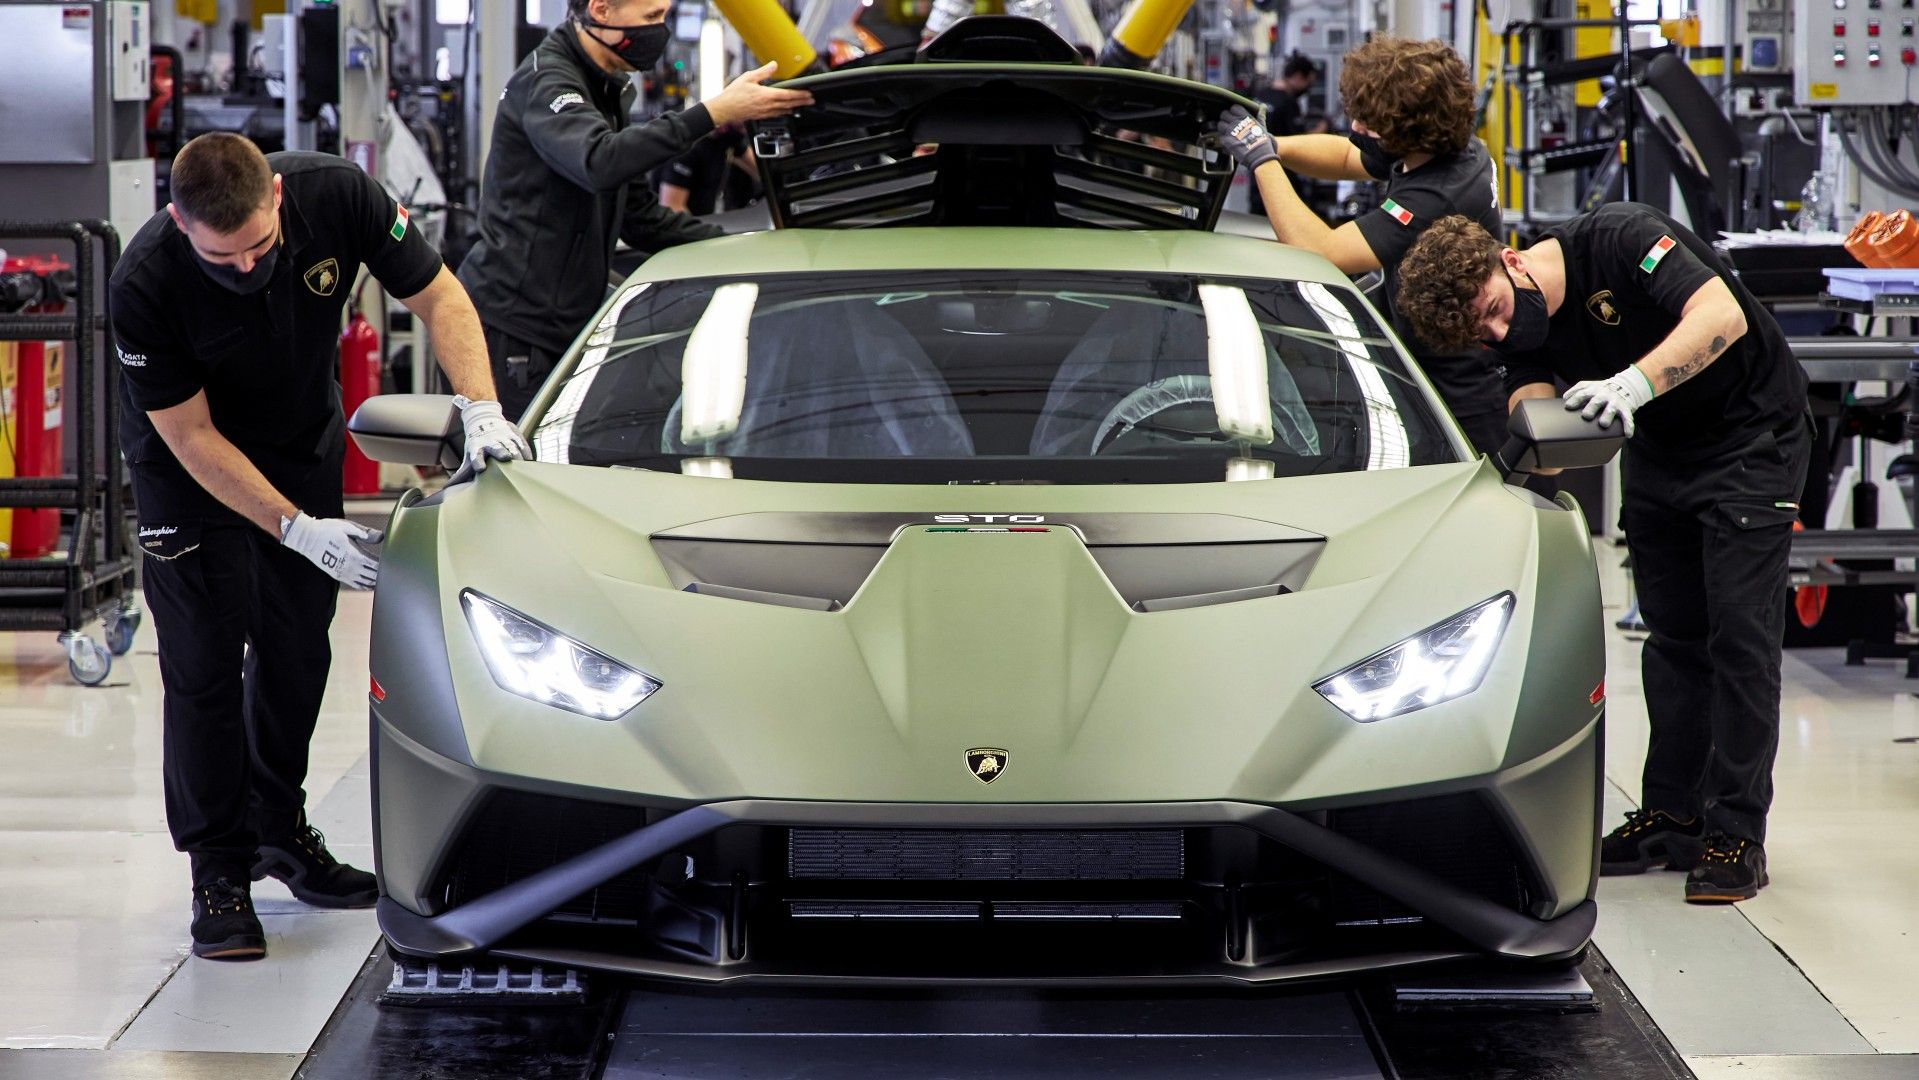 Lamborghini Plan de Empresa 2021 2025 (21)